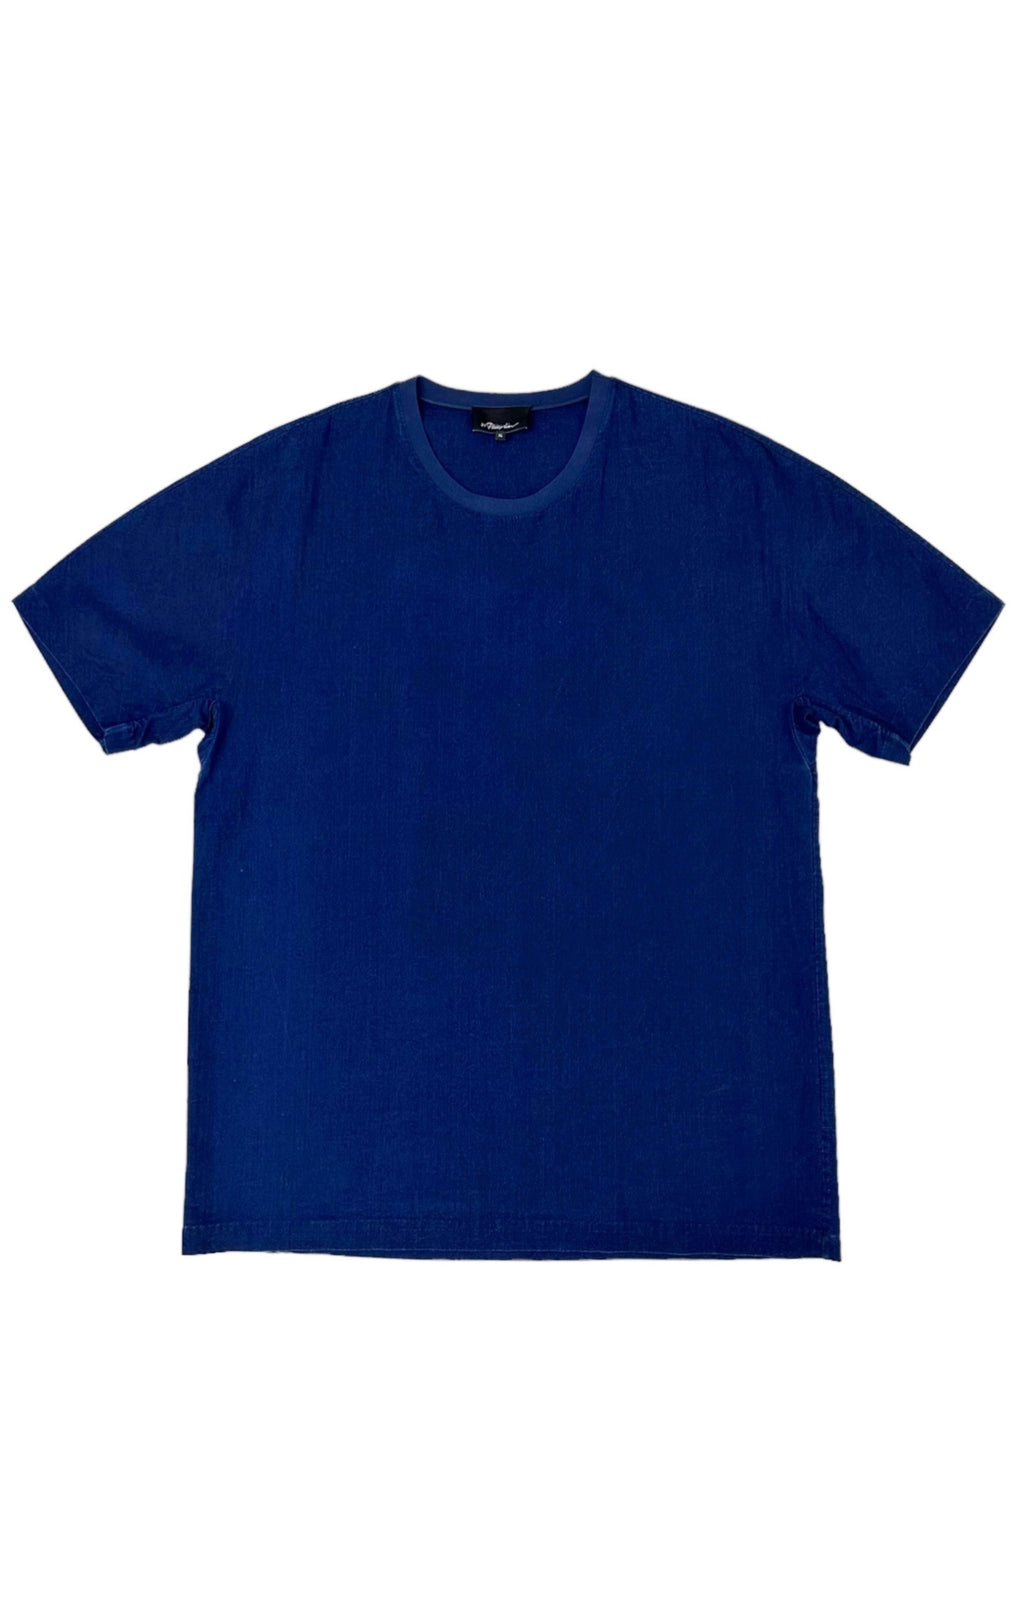 3.1 PHILLIP LIM (RARE) Shirt Size: XL